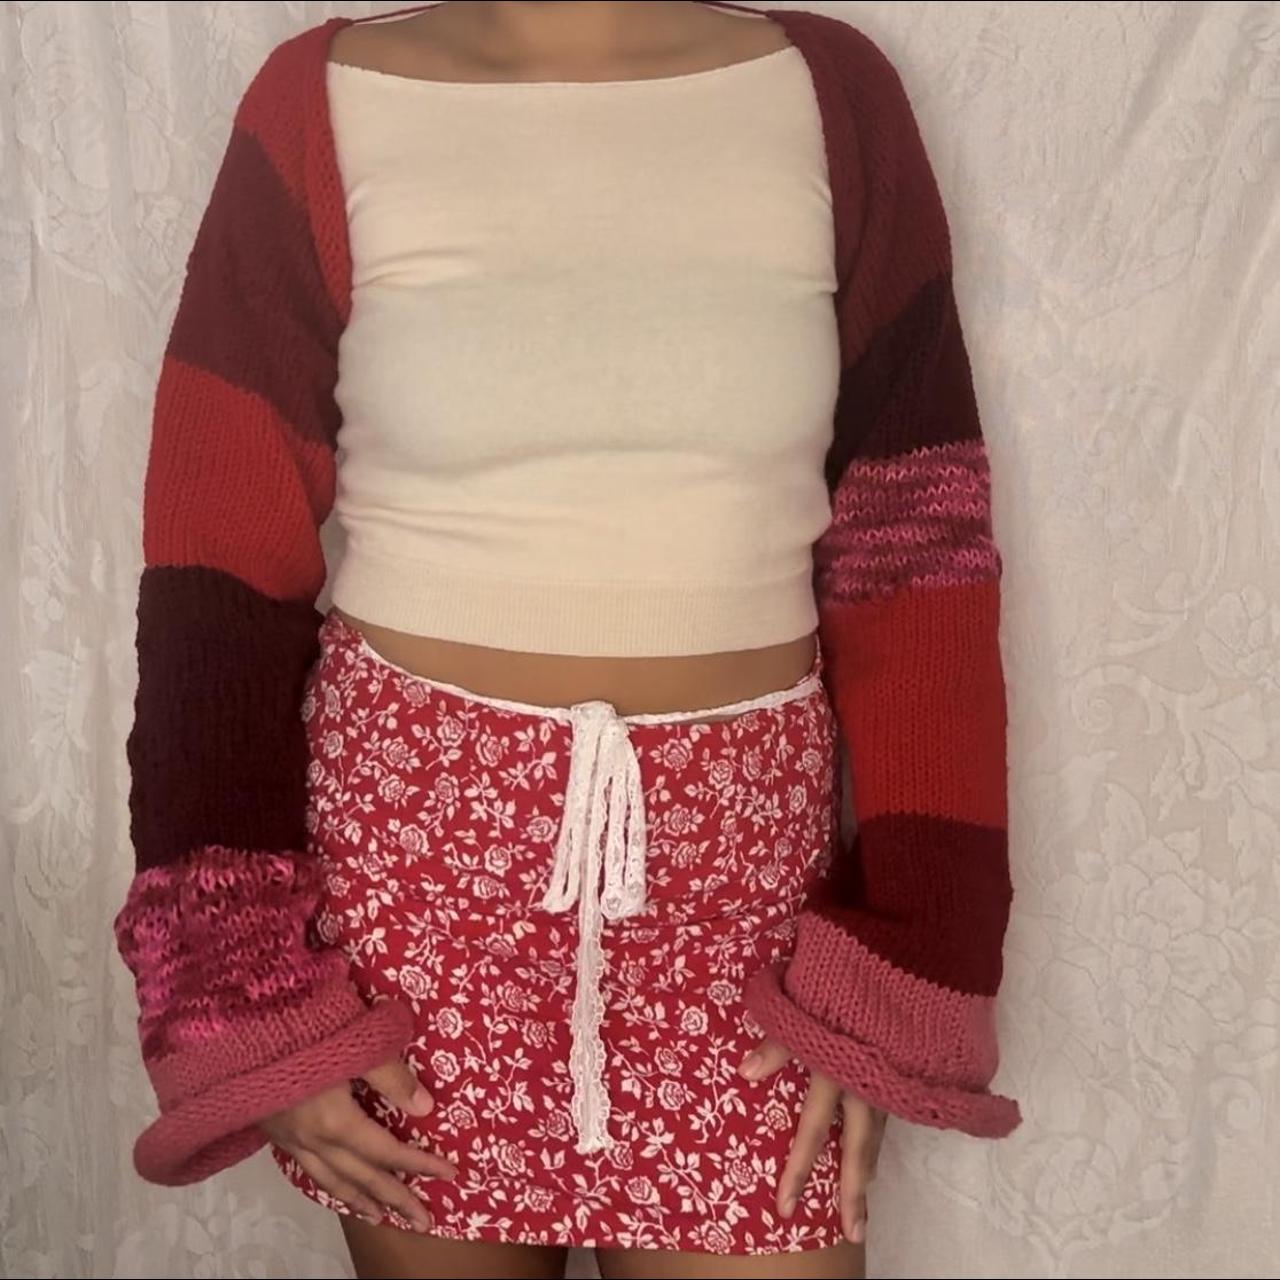 Paloma Wool cropped bolero jumper sleeves with hand - Depop